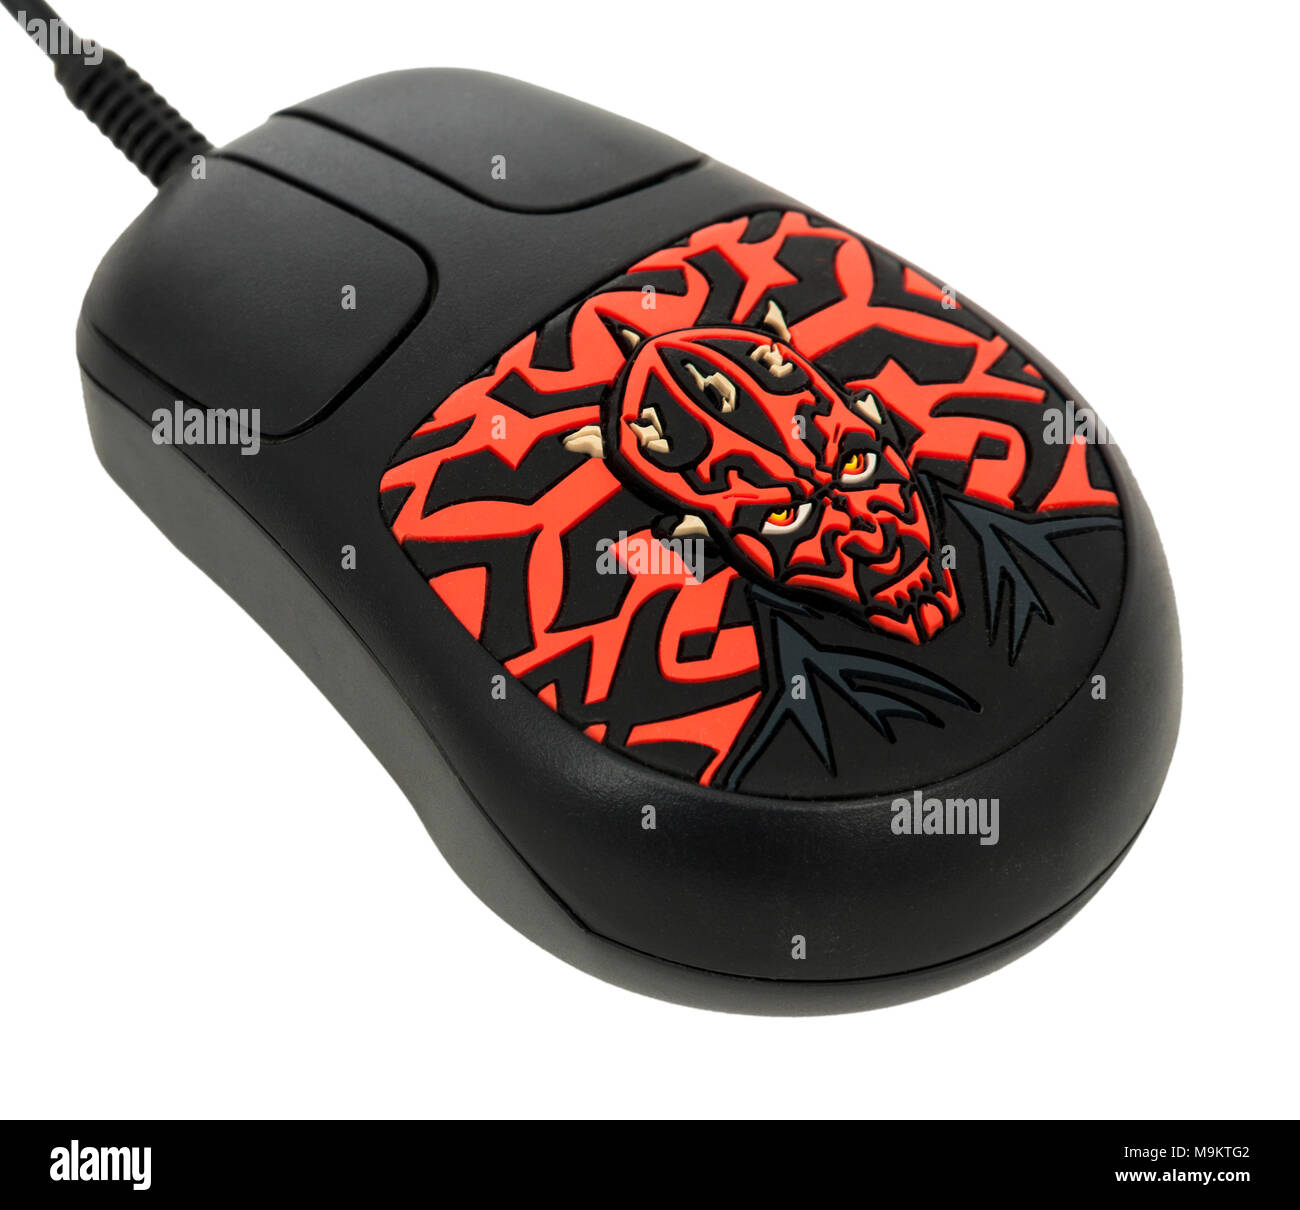 Star Wars 'Darth Maul' computer mouse Stock Photo